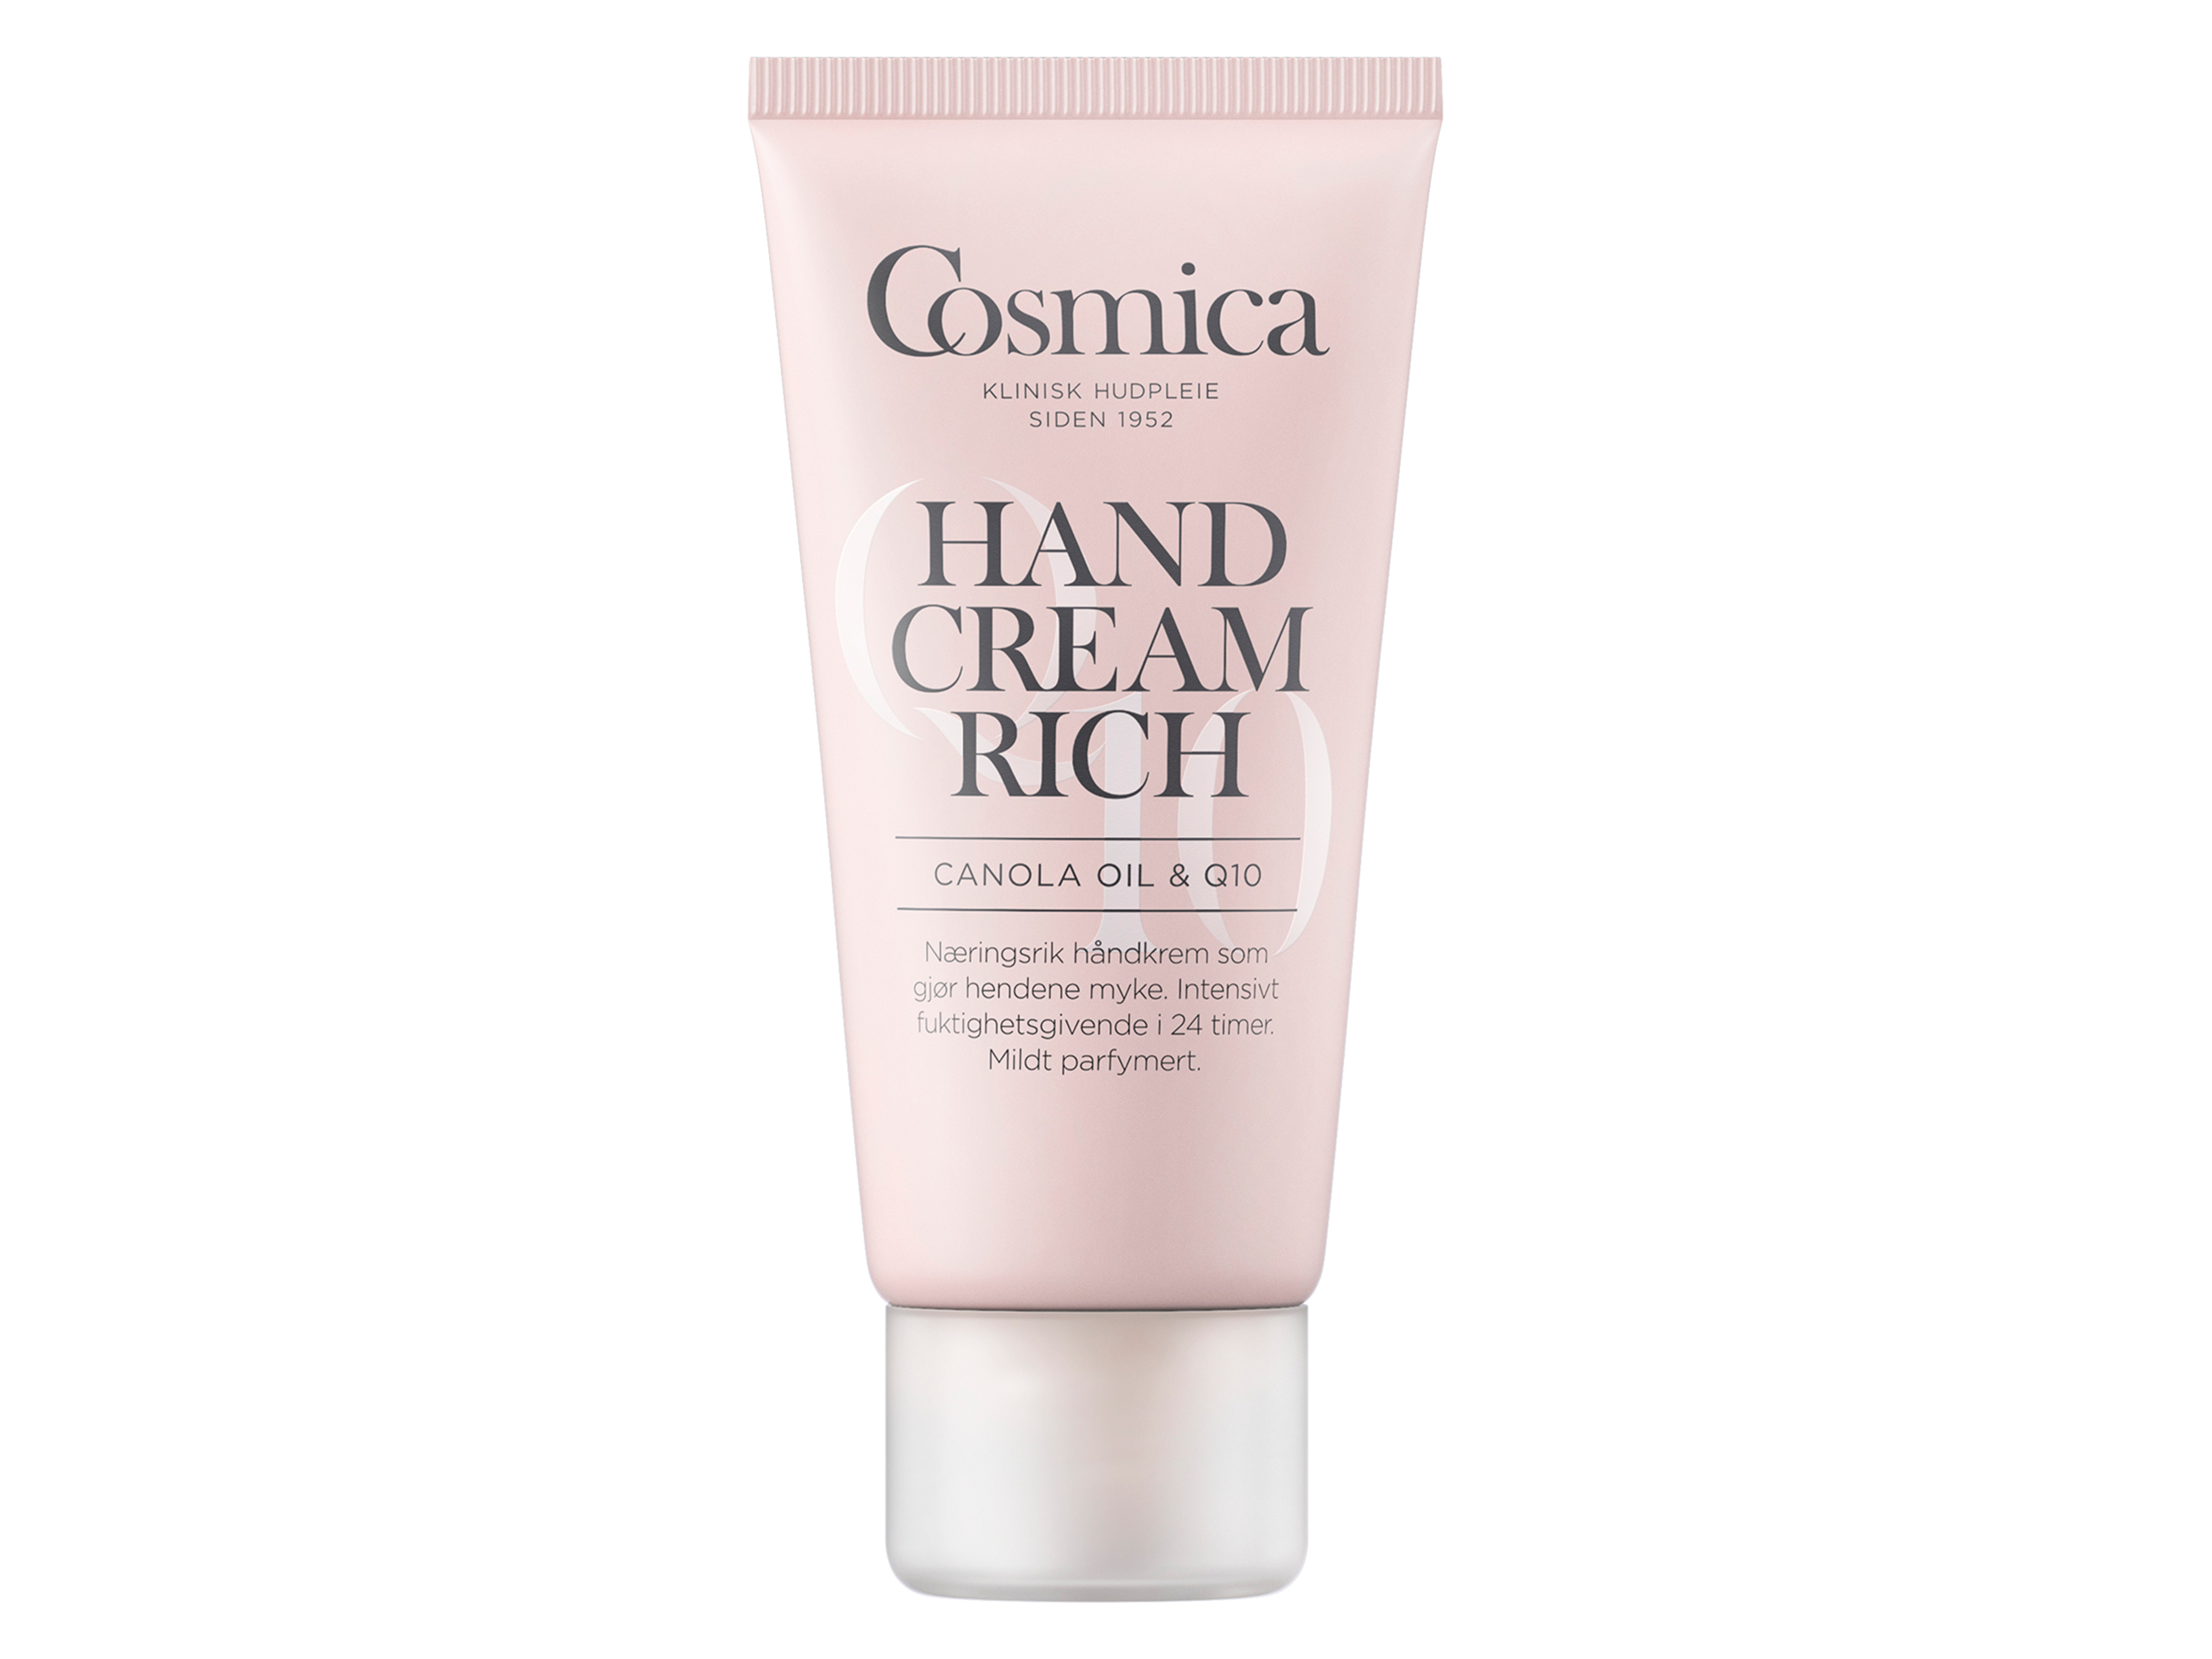 Cosmica Hand Cream Rich m/p, 75 ml